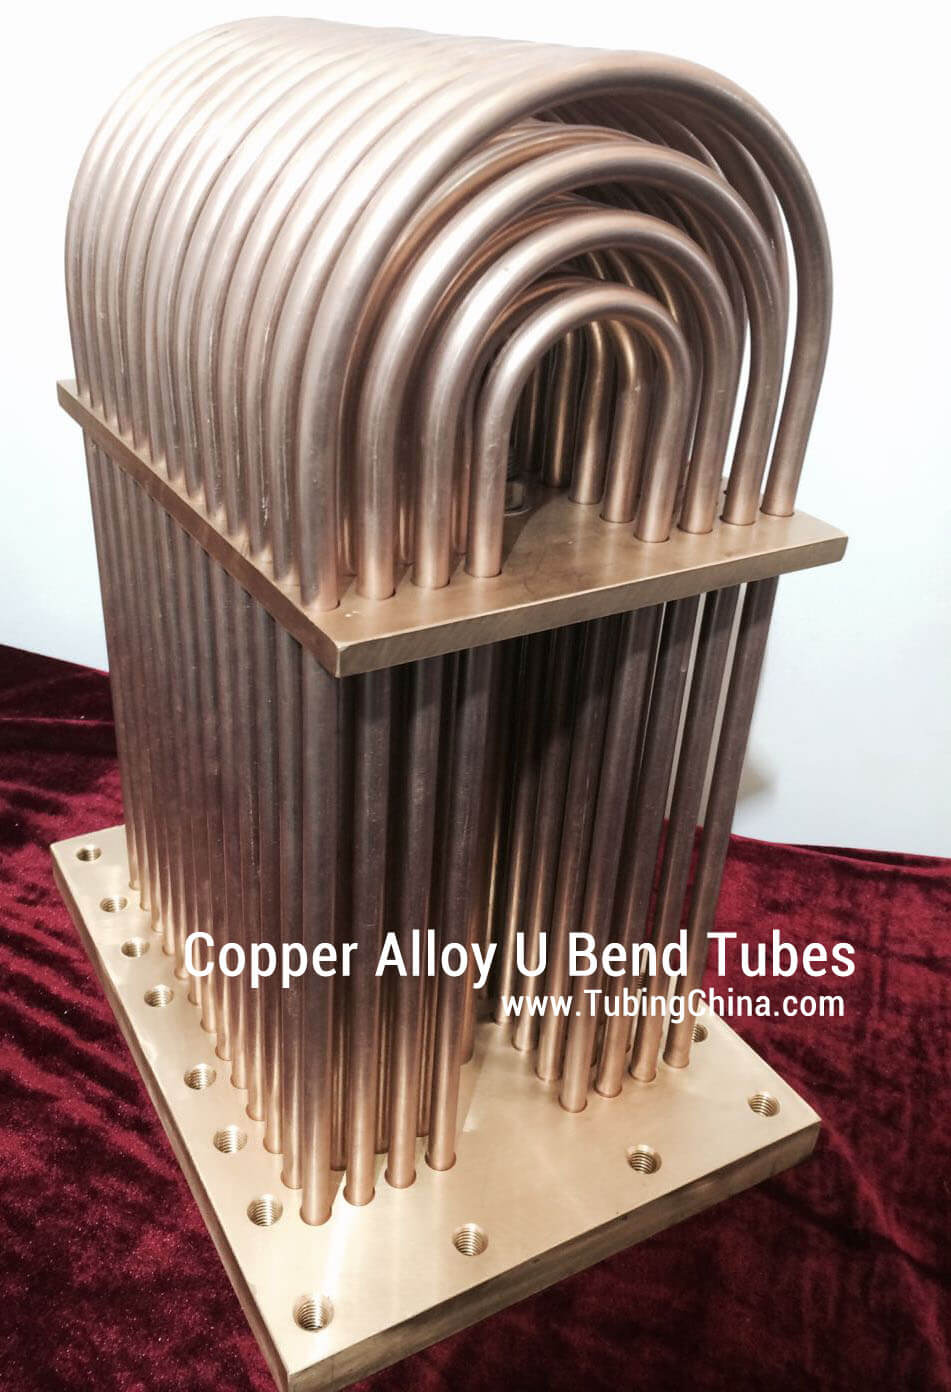 Copper Alloy U bend Tubes